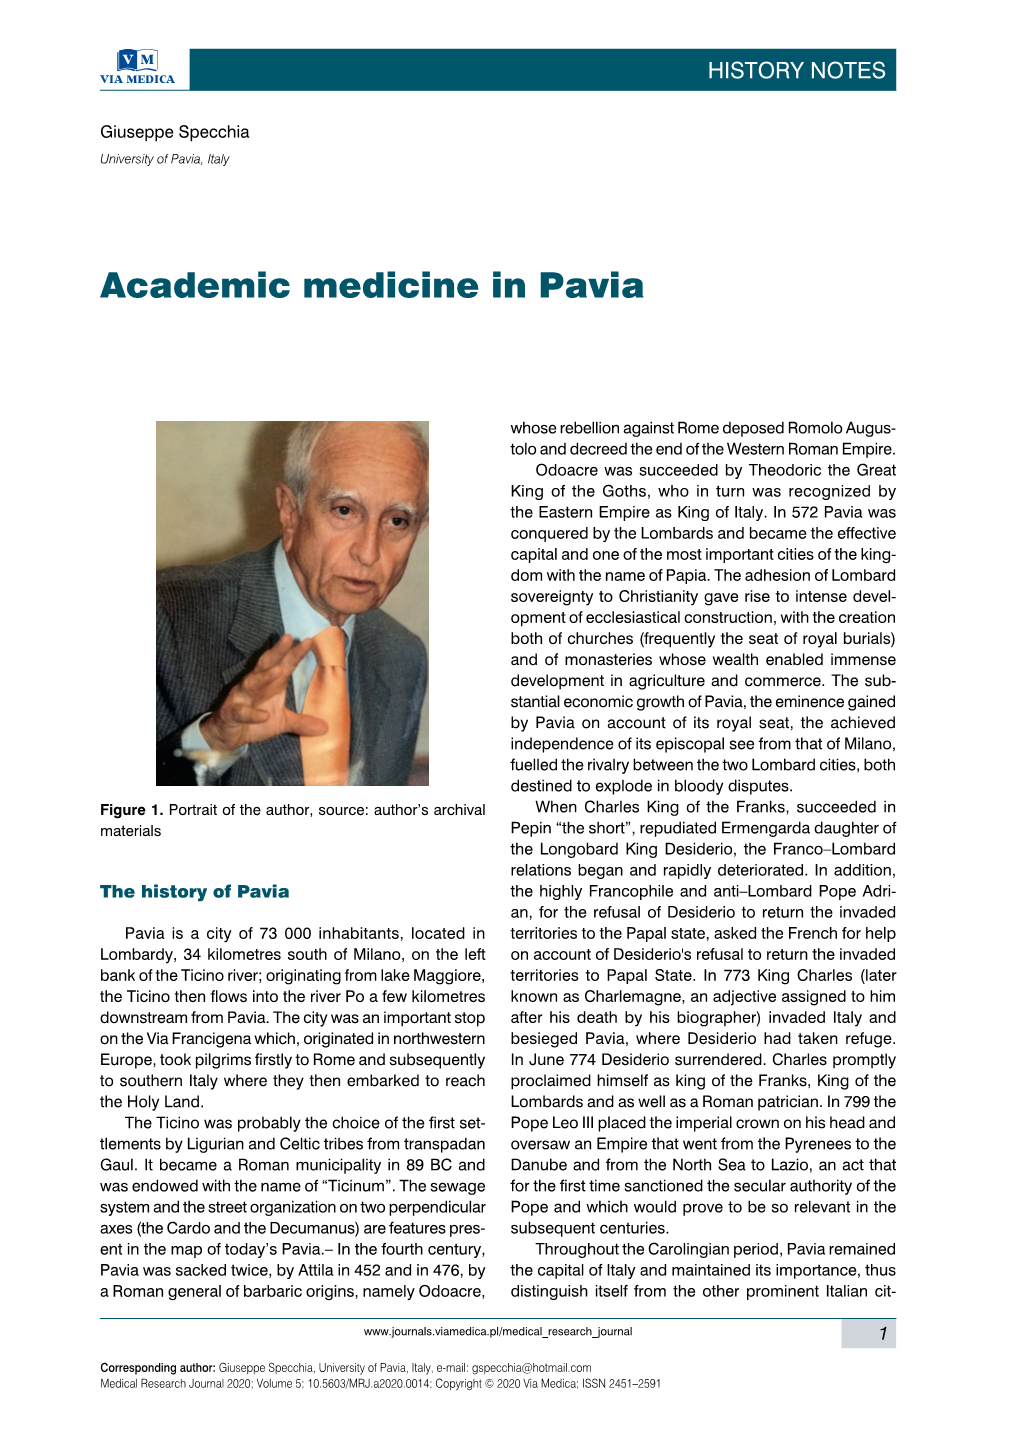 Academic Medicine in Pavia